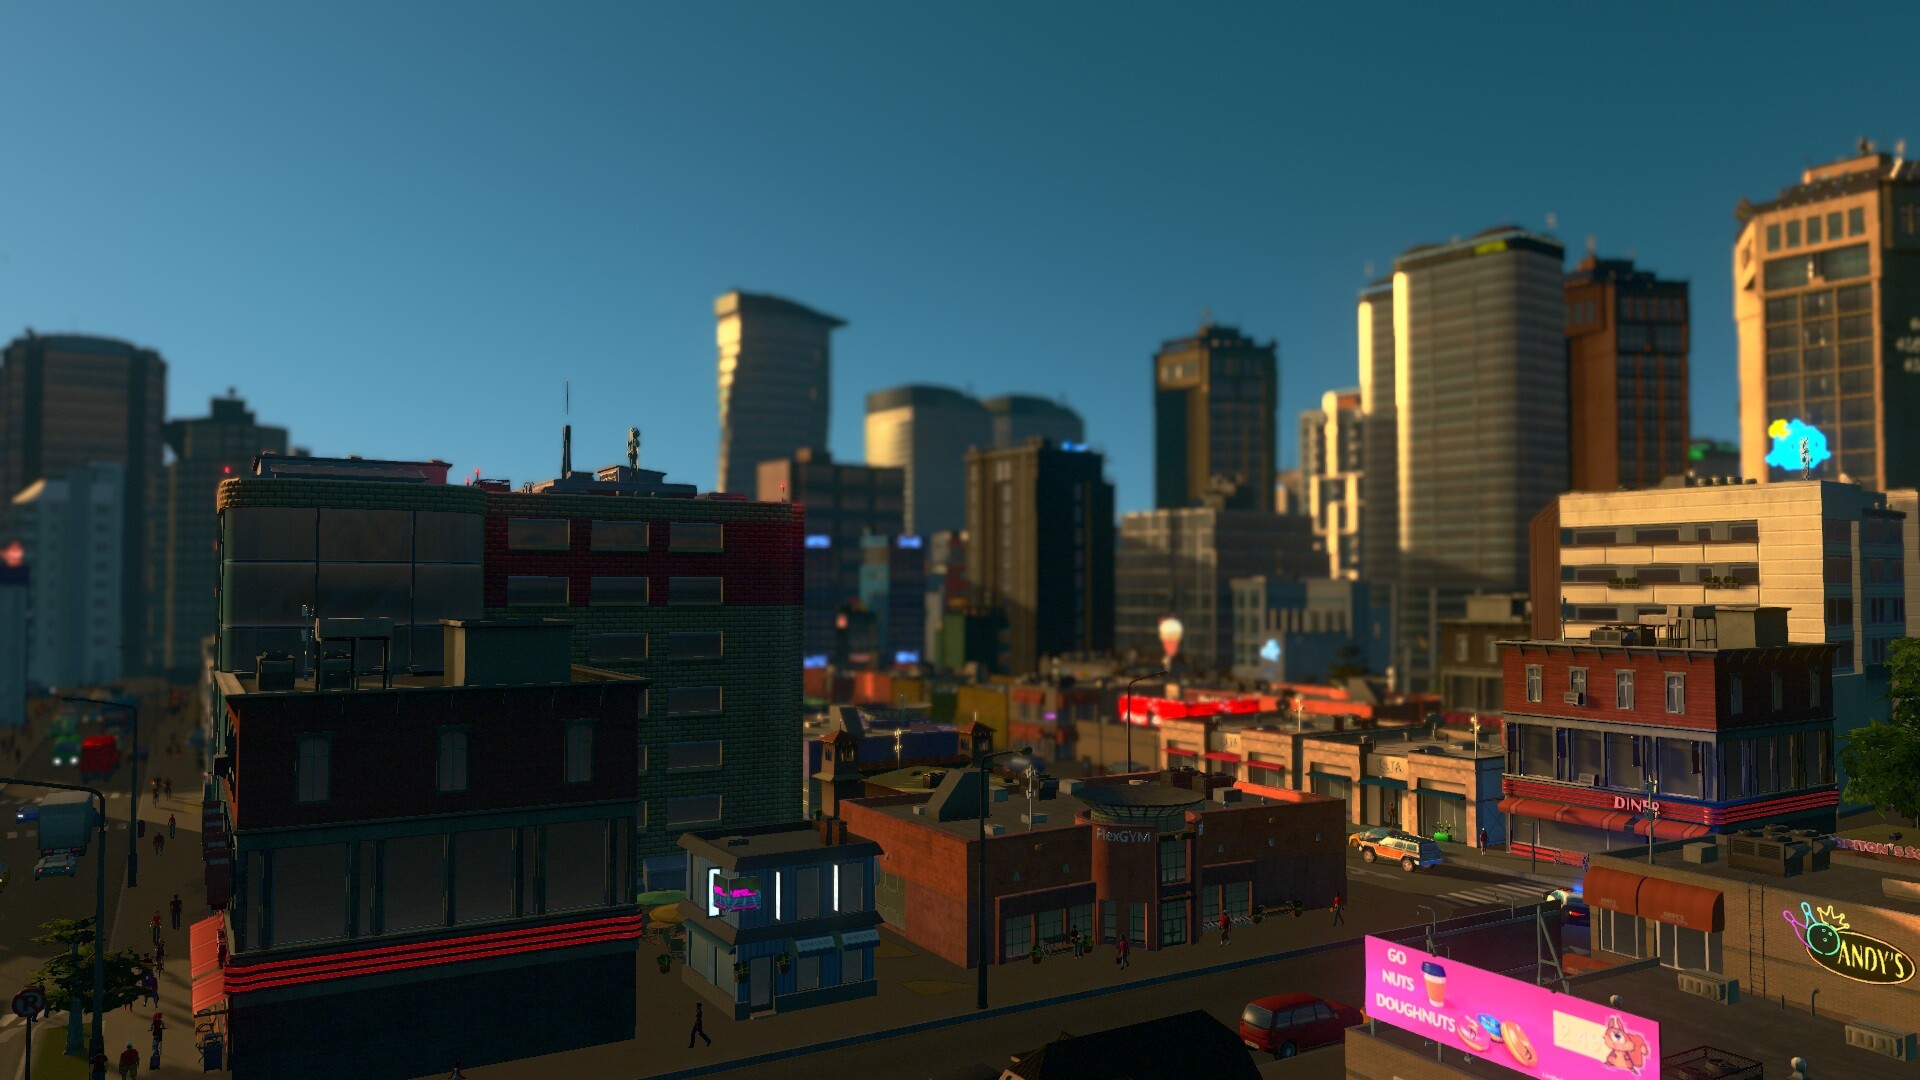 Cities: Skylines - K-pop Station DLC Steam CD Key